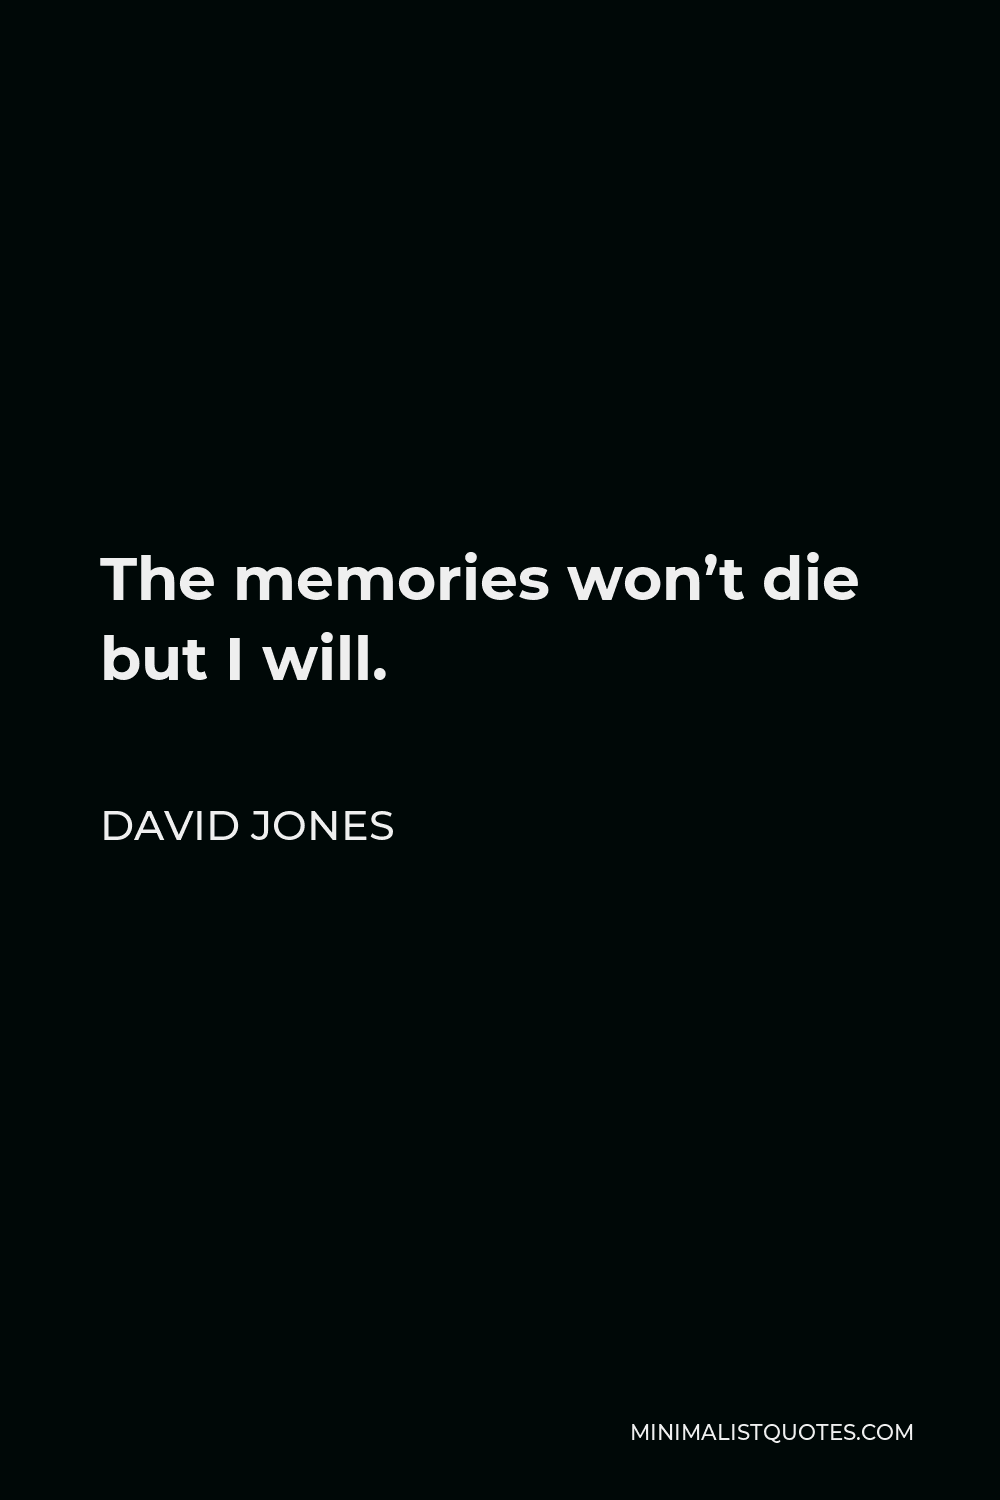 David Jones Quote - The memories won’t die but I will.